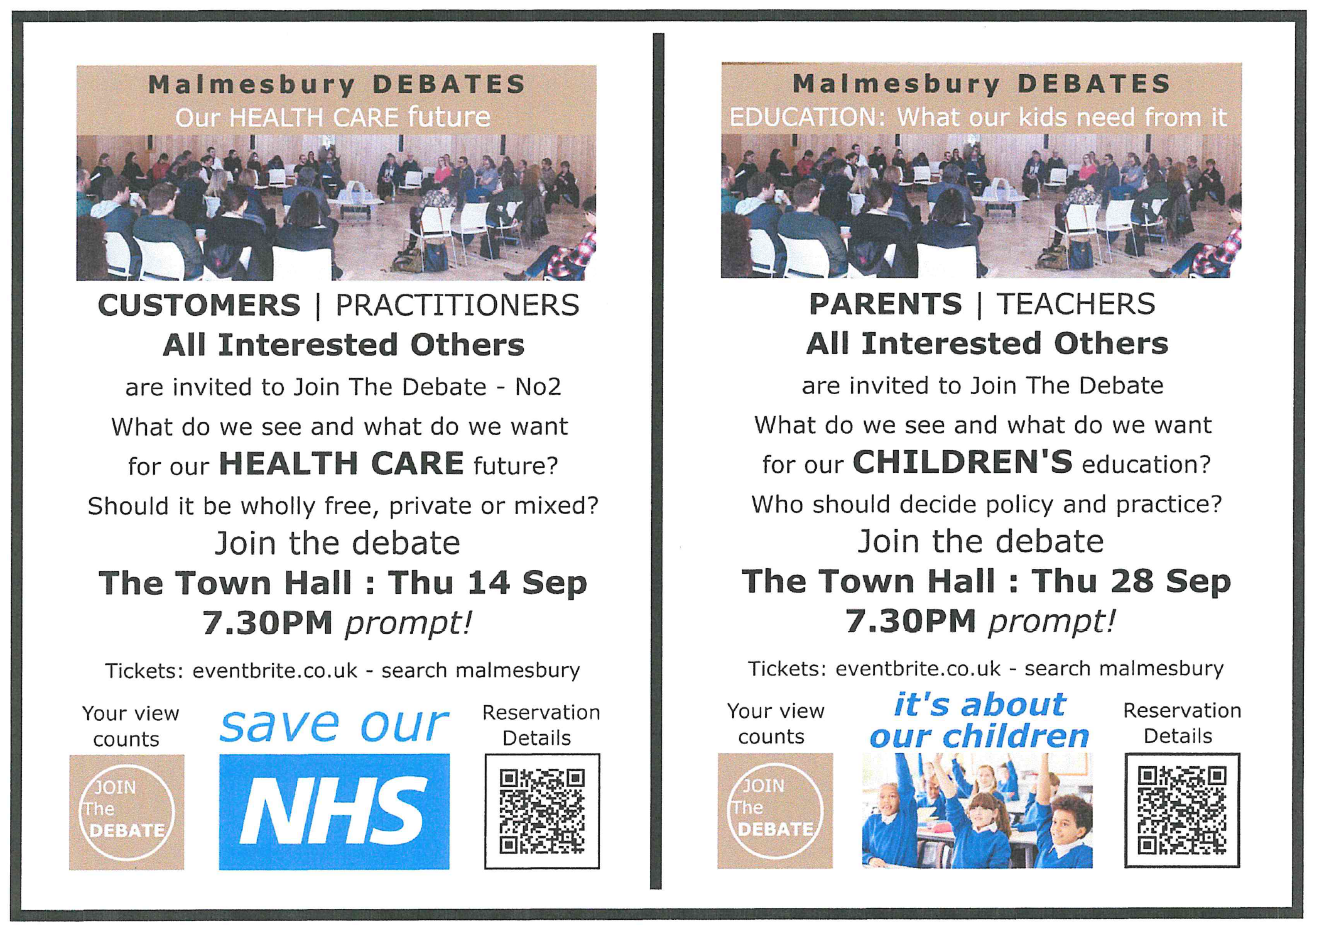 Malmesbury Debates - Health Care and Education